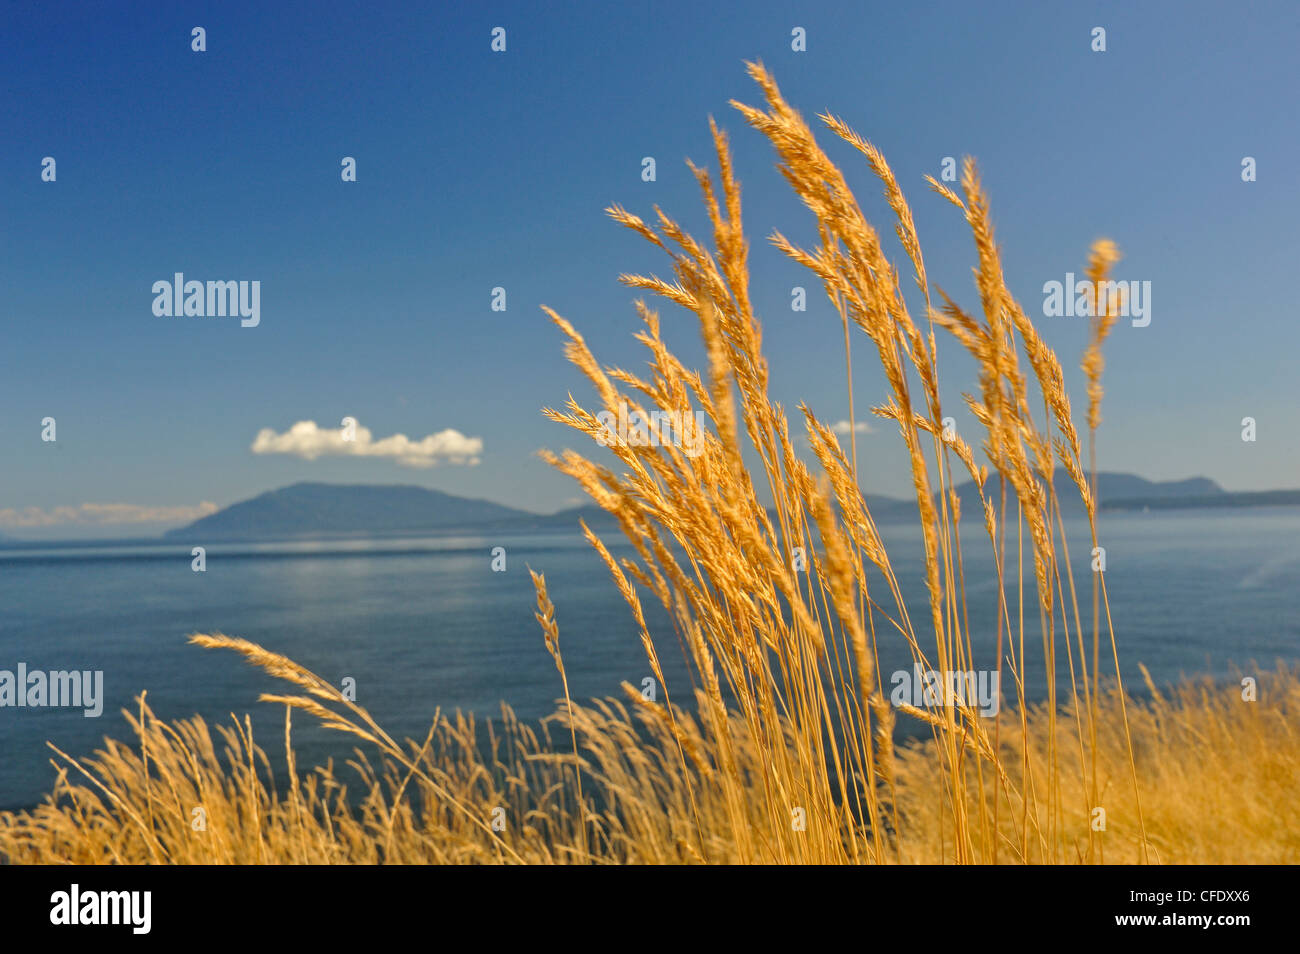 Idaho fescue (Festuca idahoensis) grass, East Point, Saturna Island, British Columbia, Canada Stock Photo